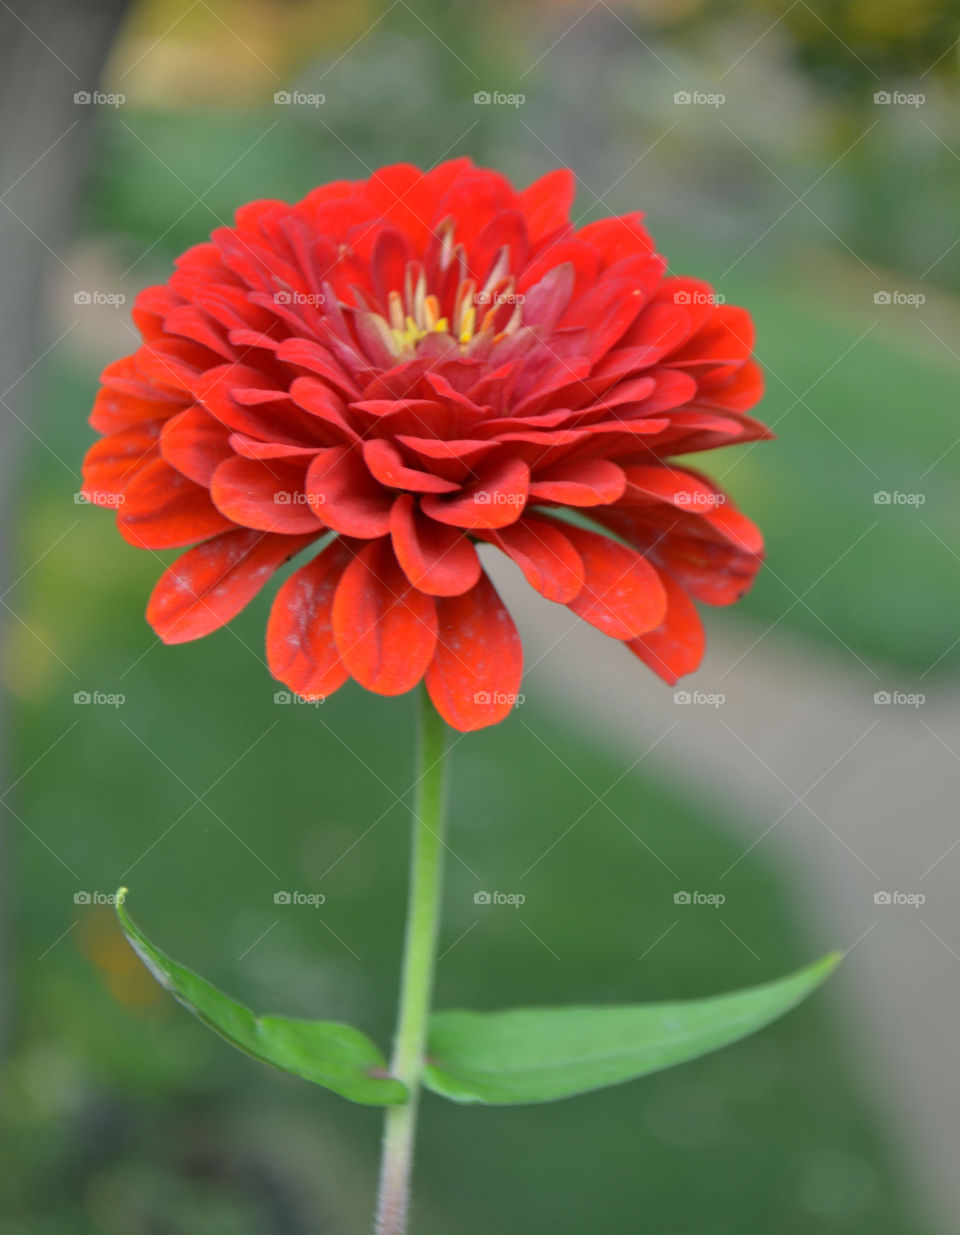 Single bright red Gerber daisy